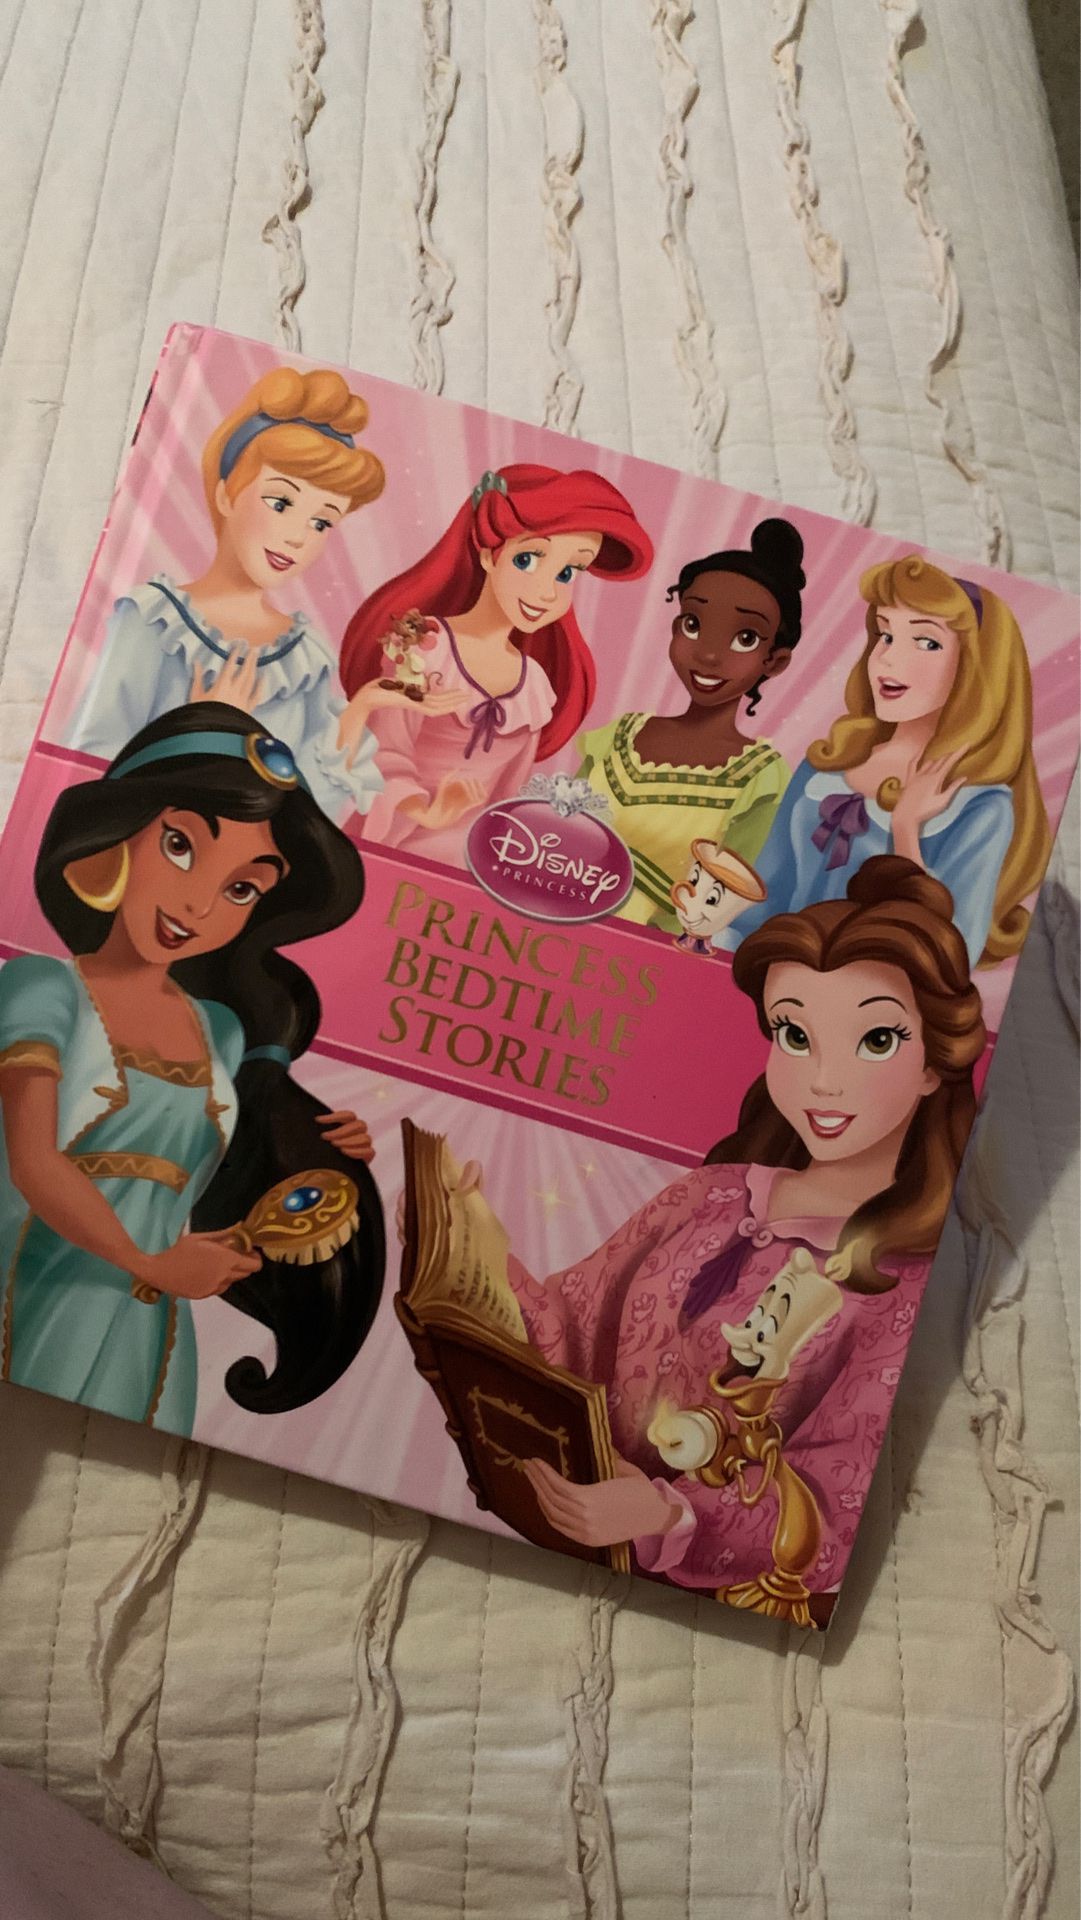 Hardcover Princess Bedtime Stories